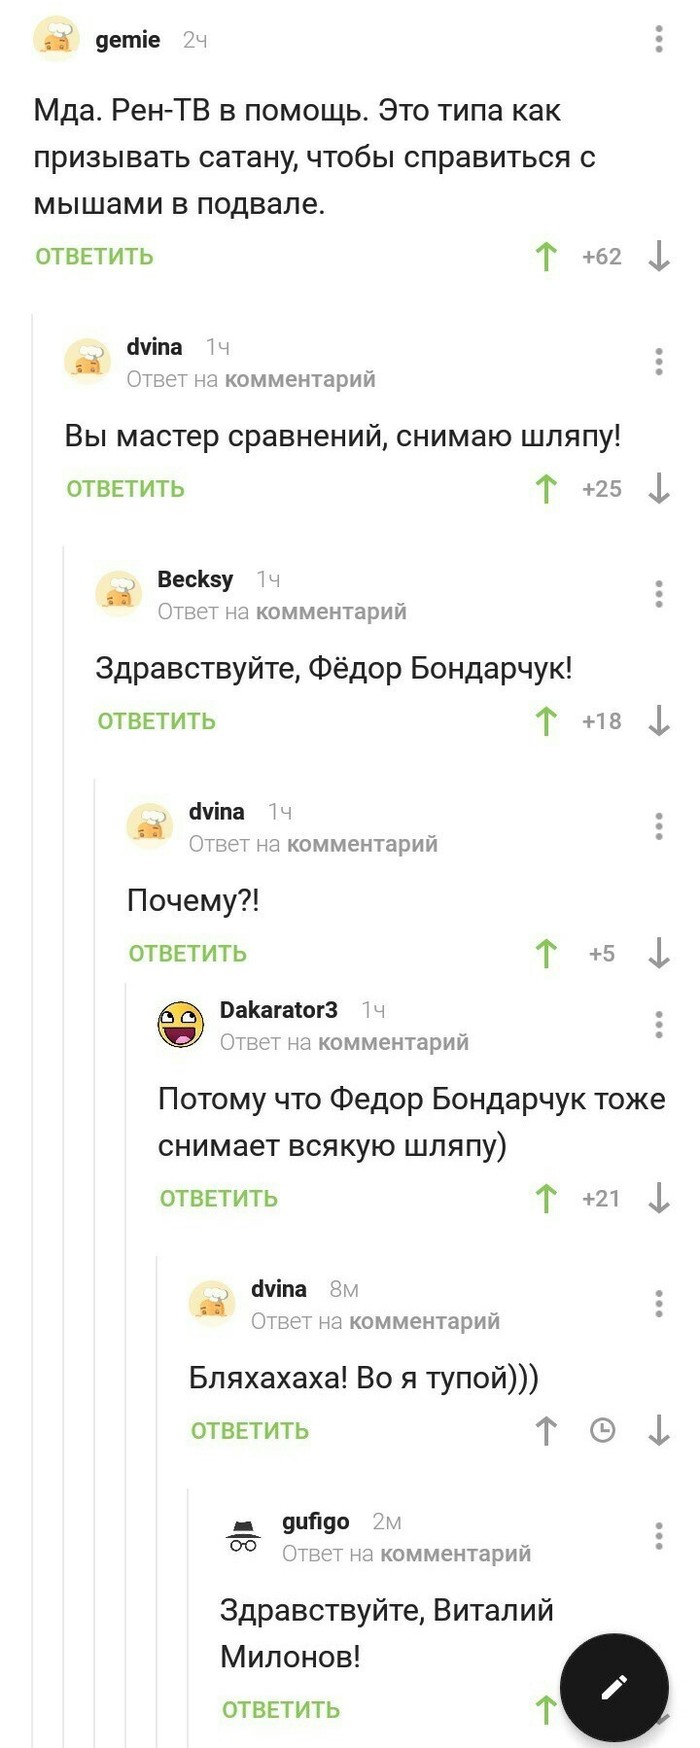 Fedoraly Bondarlonov - Comments on Peekaboo, Bondarchuk, Milonov, Longpost, Screenshot, Fedor Bondarchuk, Vitaly Milonov